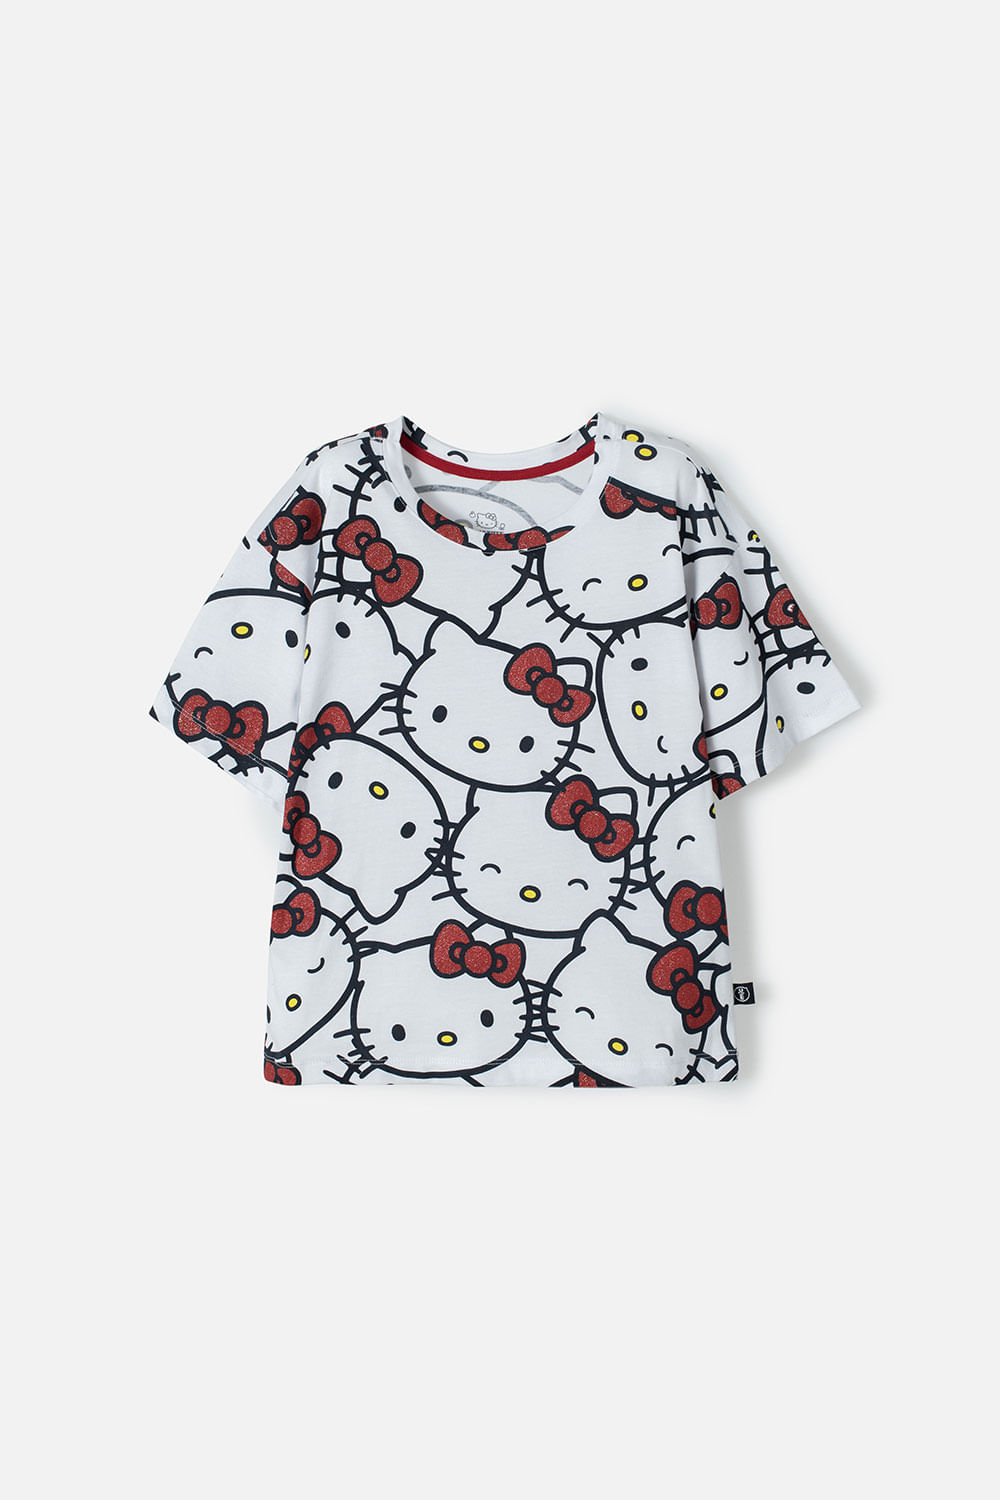 Camiseta de Hello Kitty blanca y roja manga corta para niña 4-0